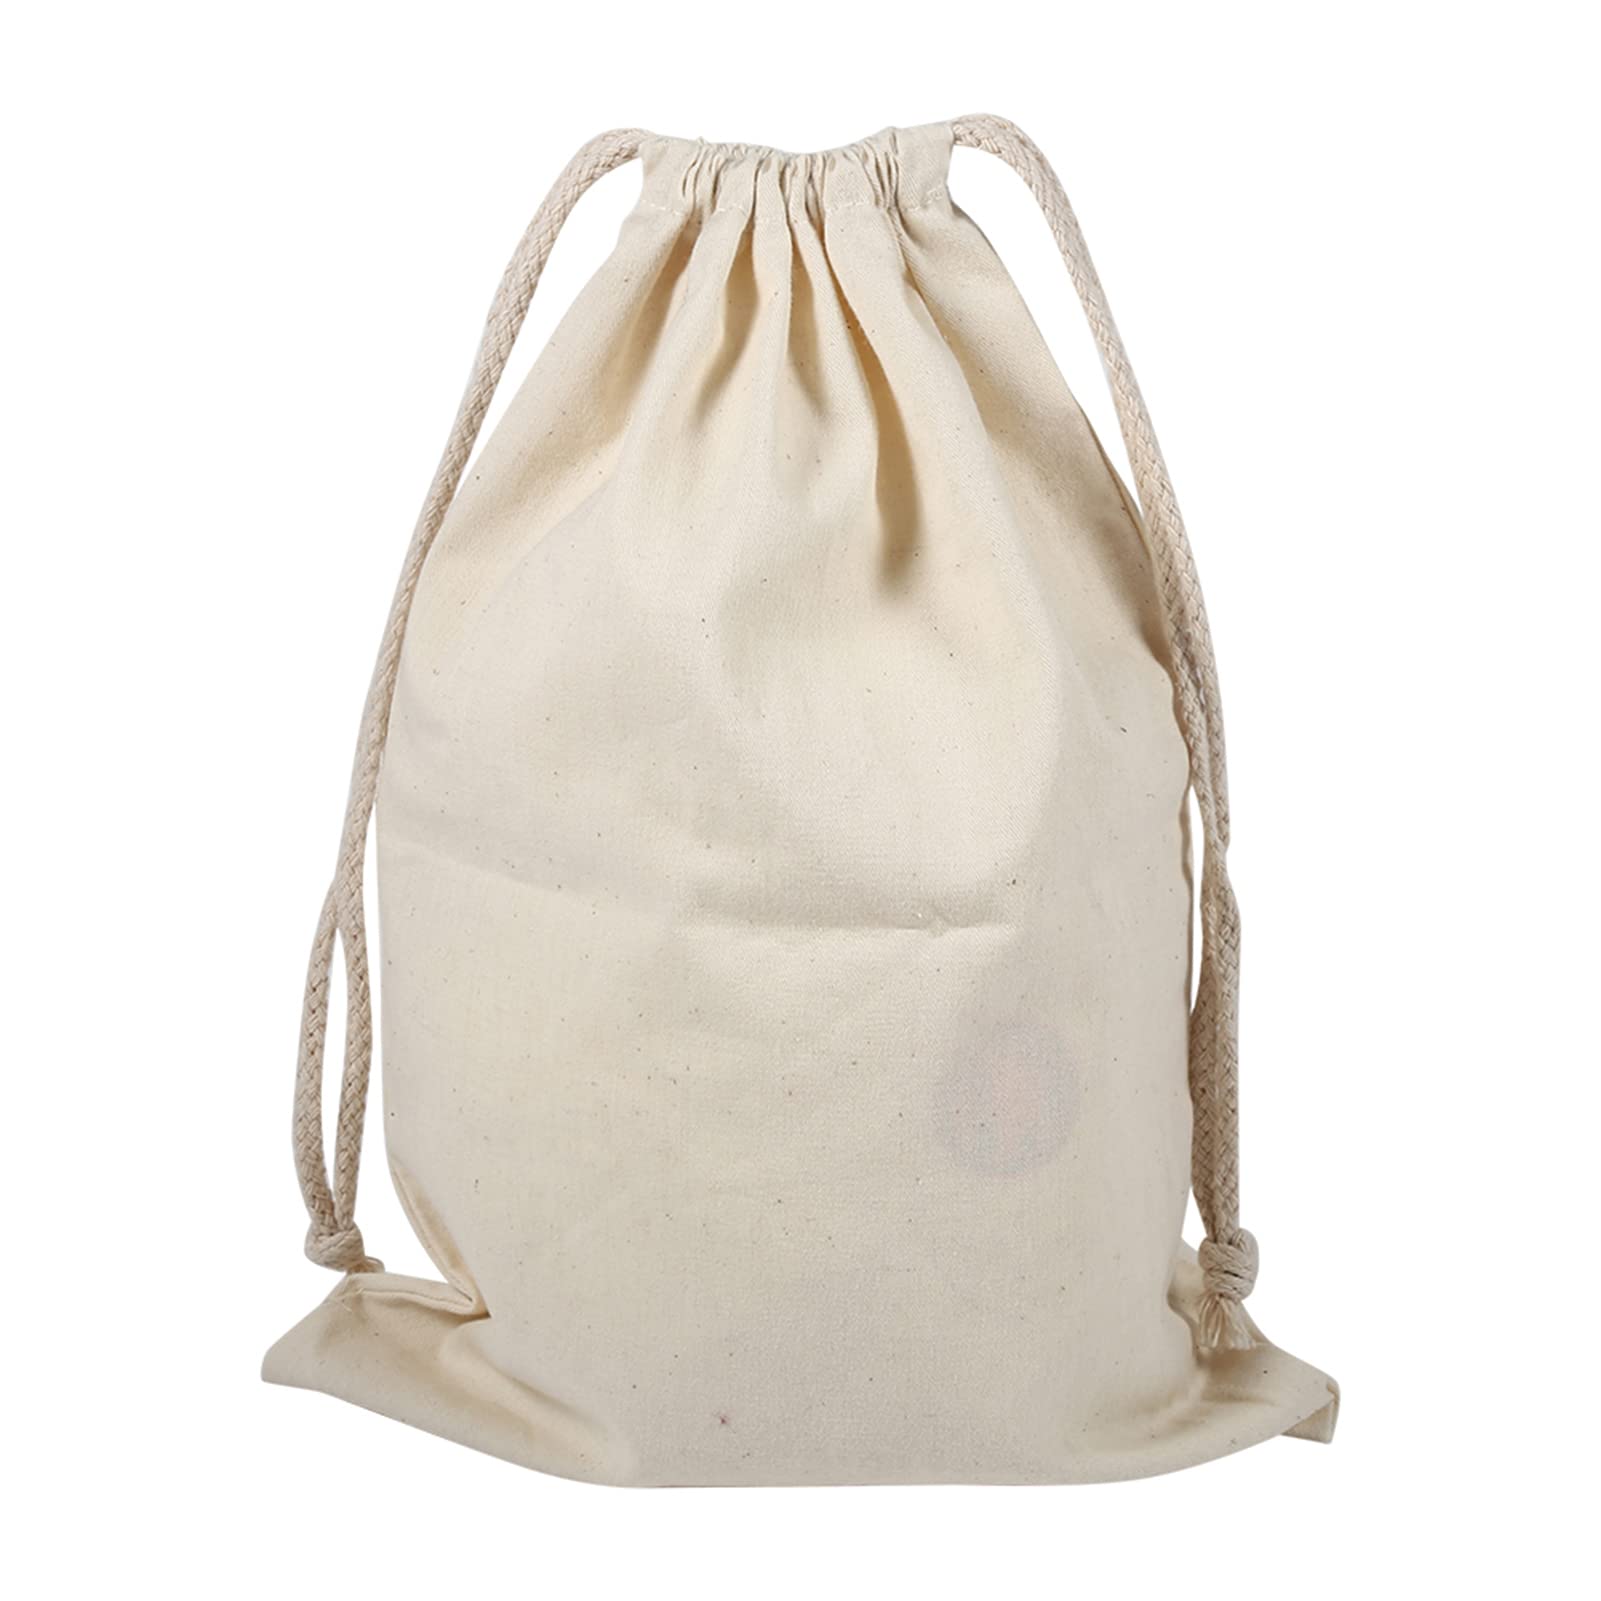 TOPINCN Cotton Stuff Bag Stuff Drawstring Pocket Simple Bag Cotton Purse Plain for Baggie Bagging Laundry Bags (22 * 28cm)